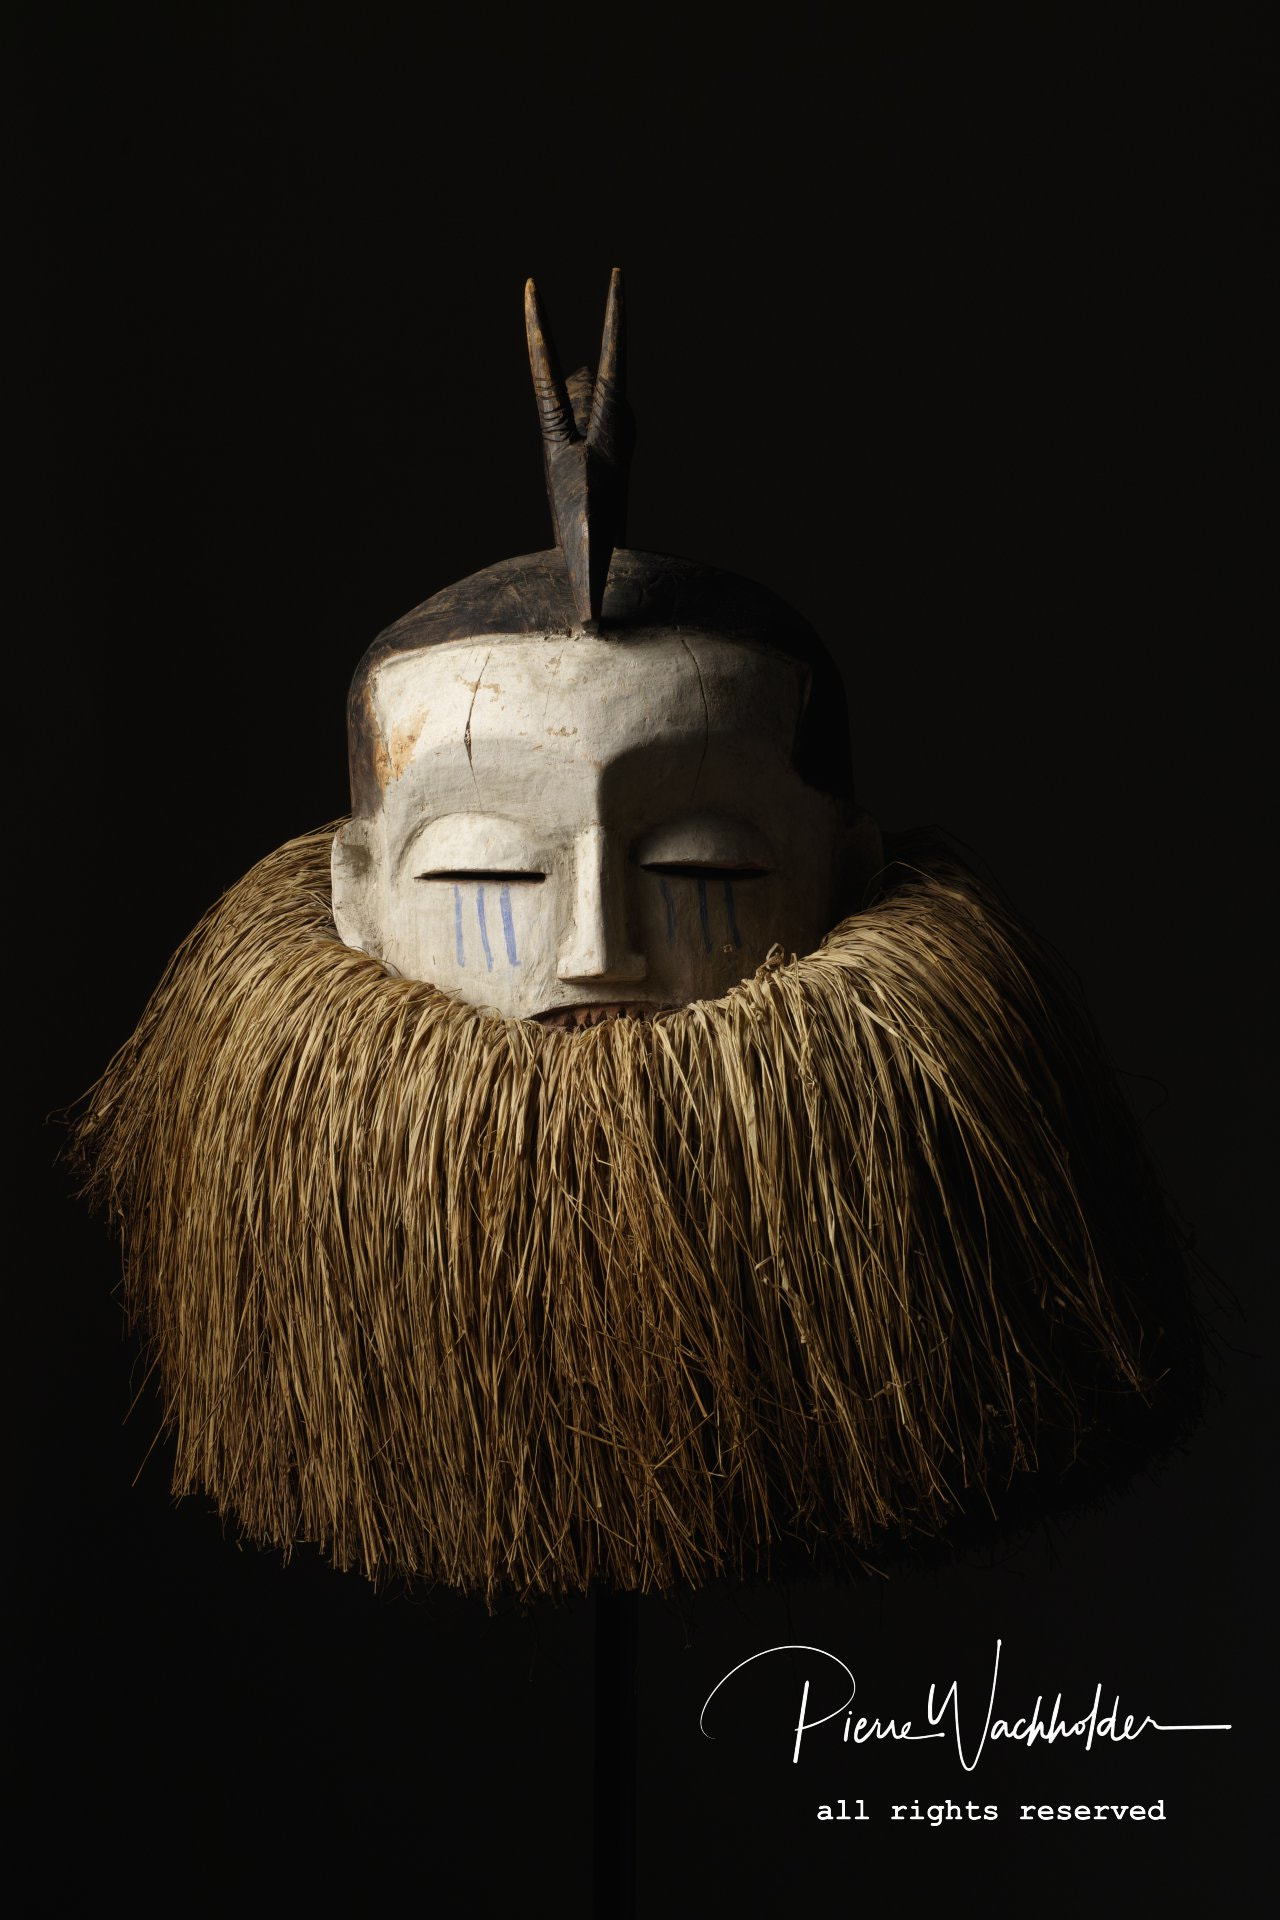 Sigma SD1 Merrill sample photo. Mask, dr congo, musee africain de namur photography